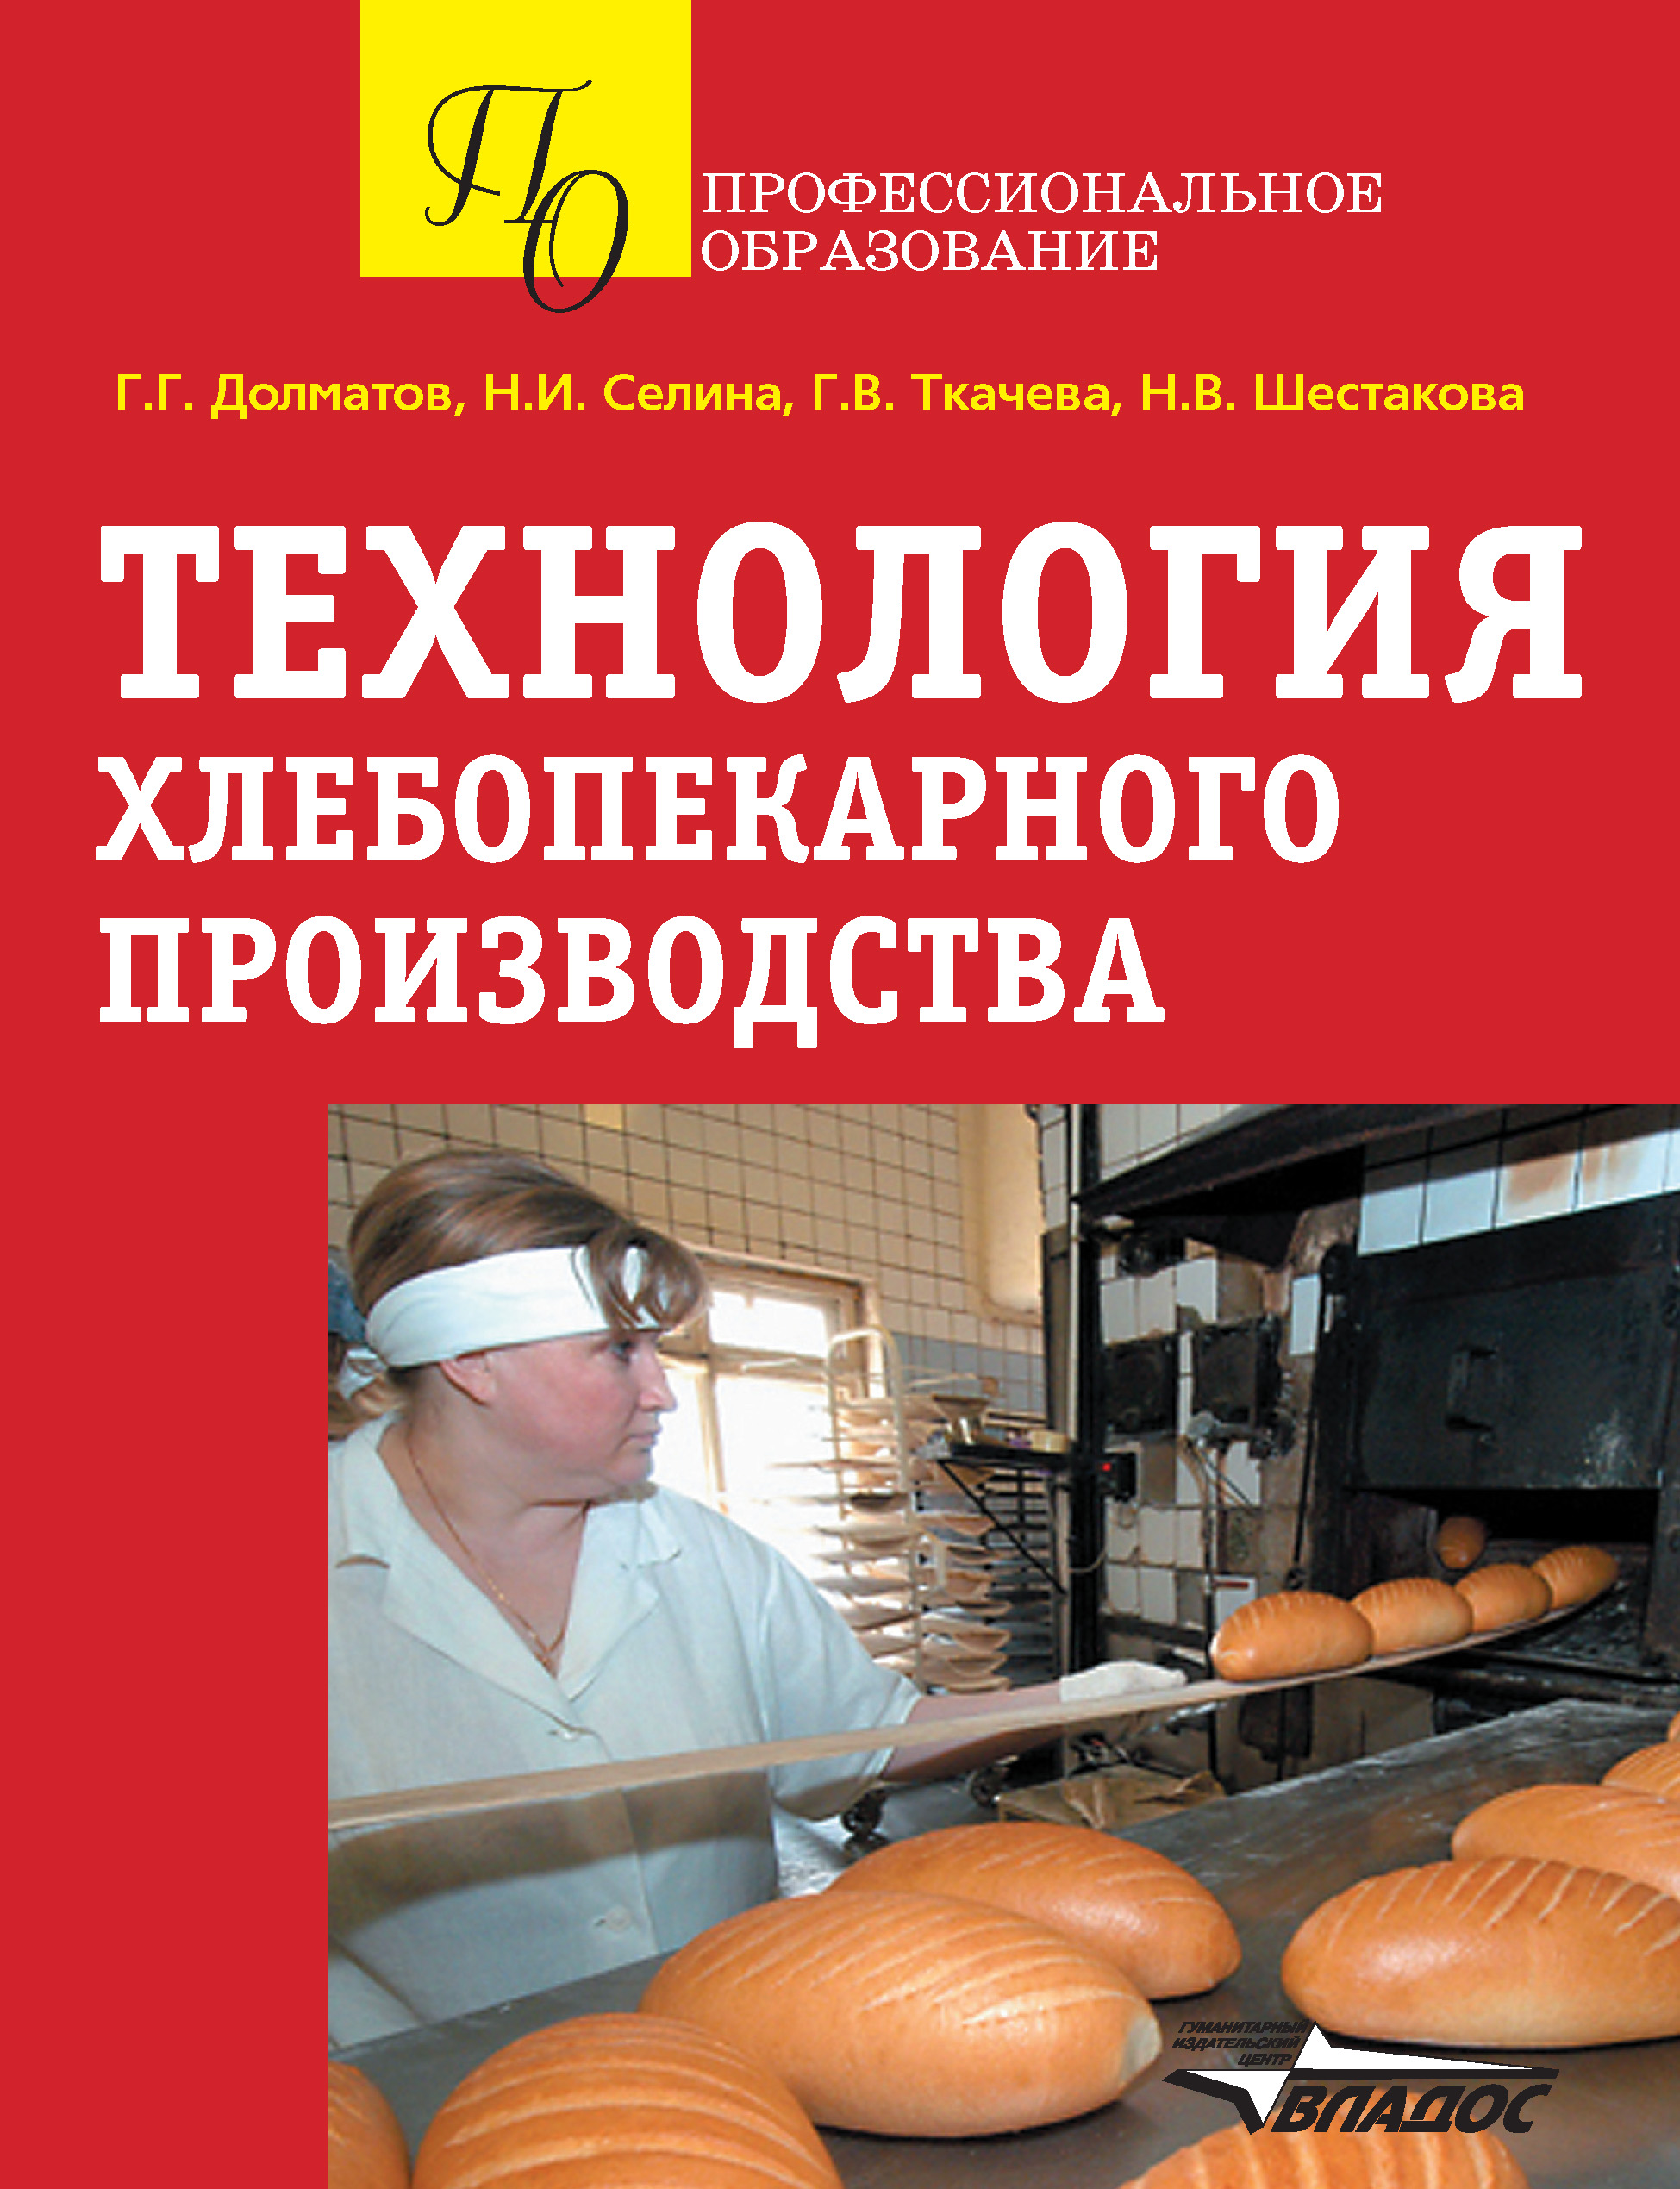 Технология хлебопекарного производства